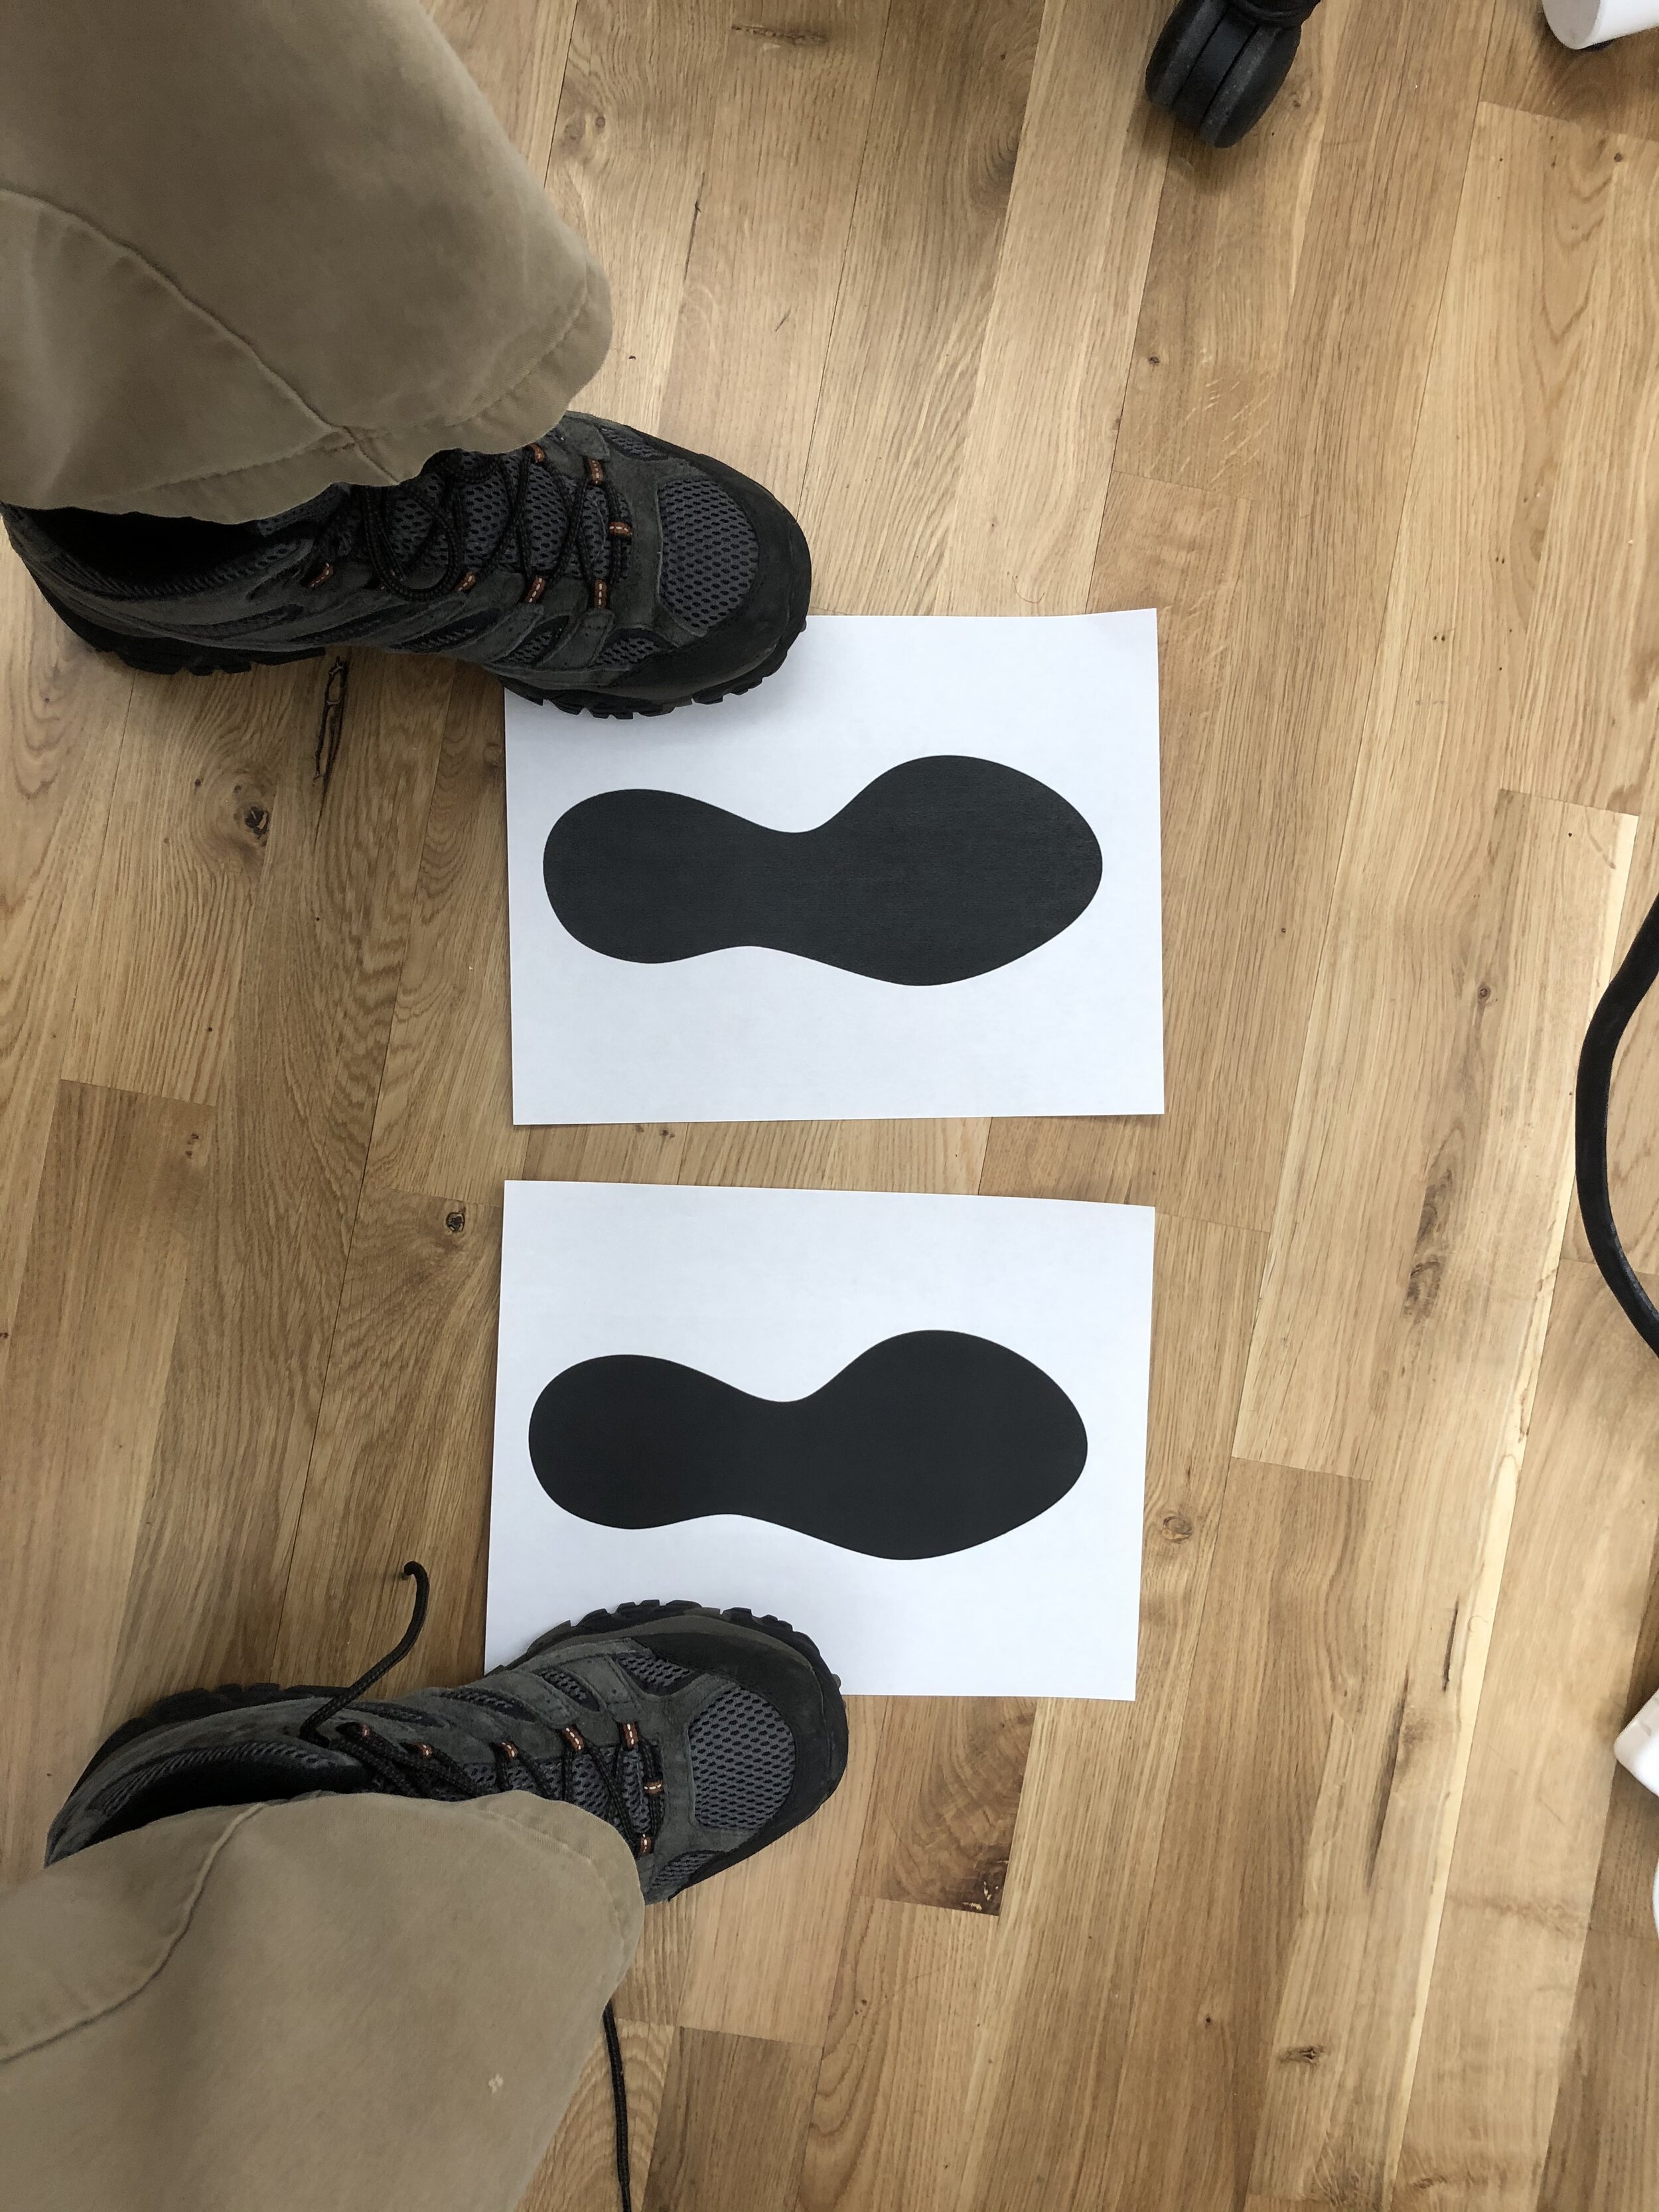 footprint printouts for mock foot sensors